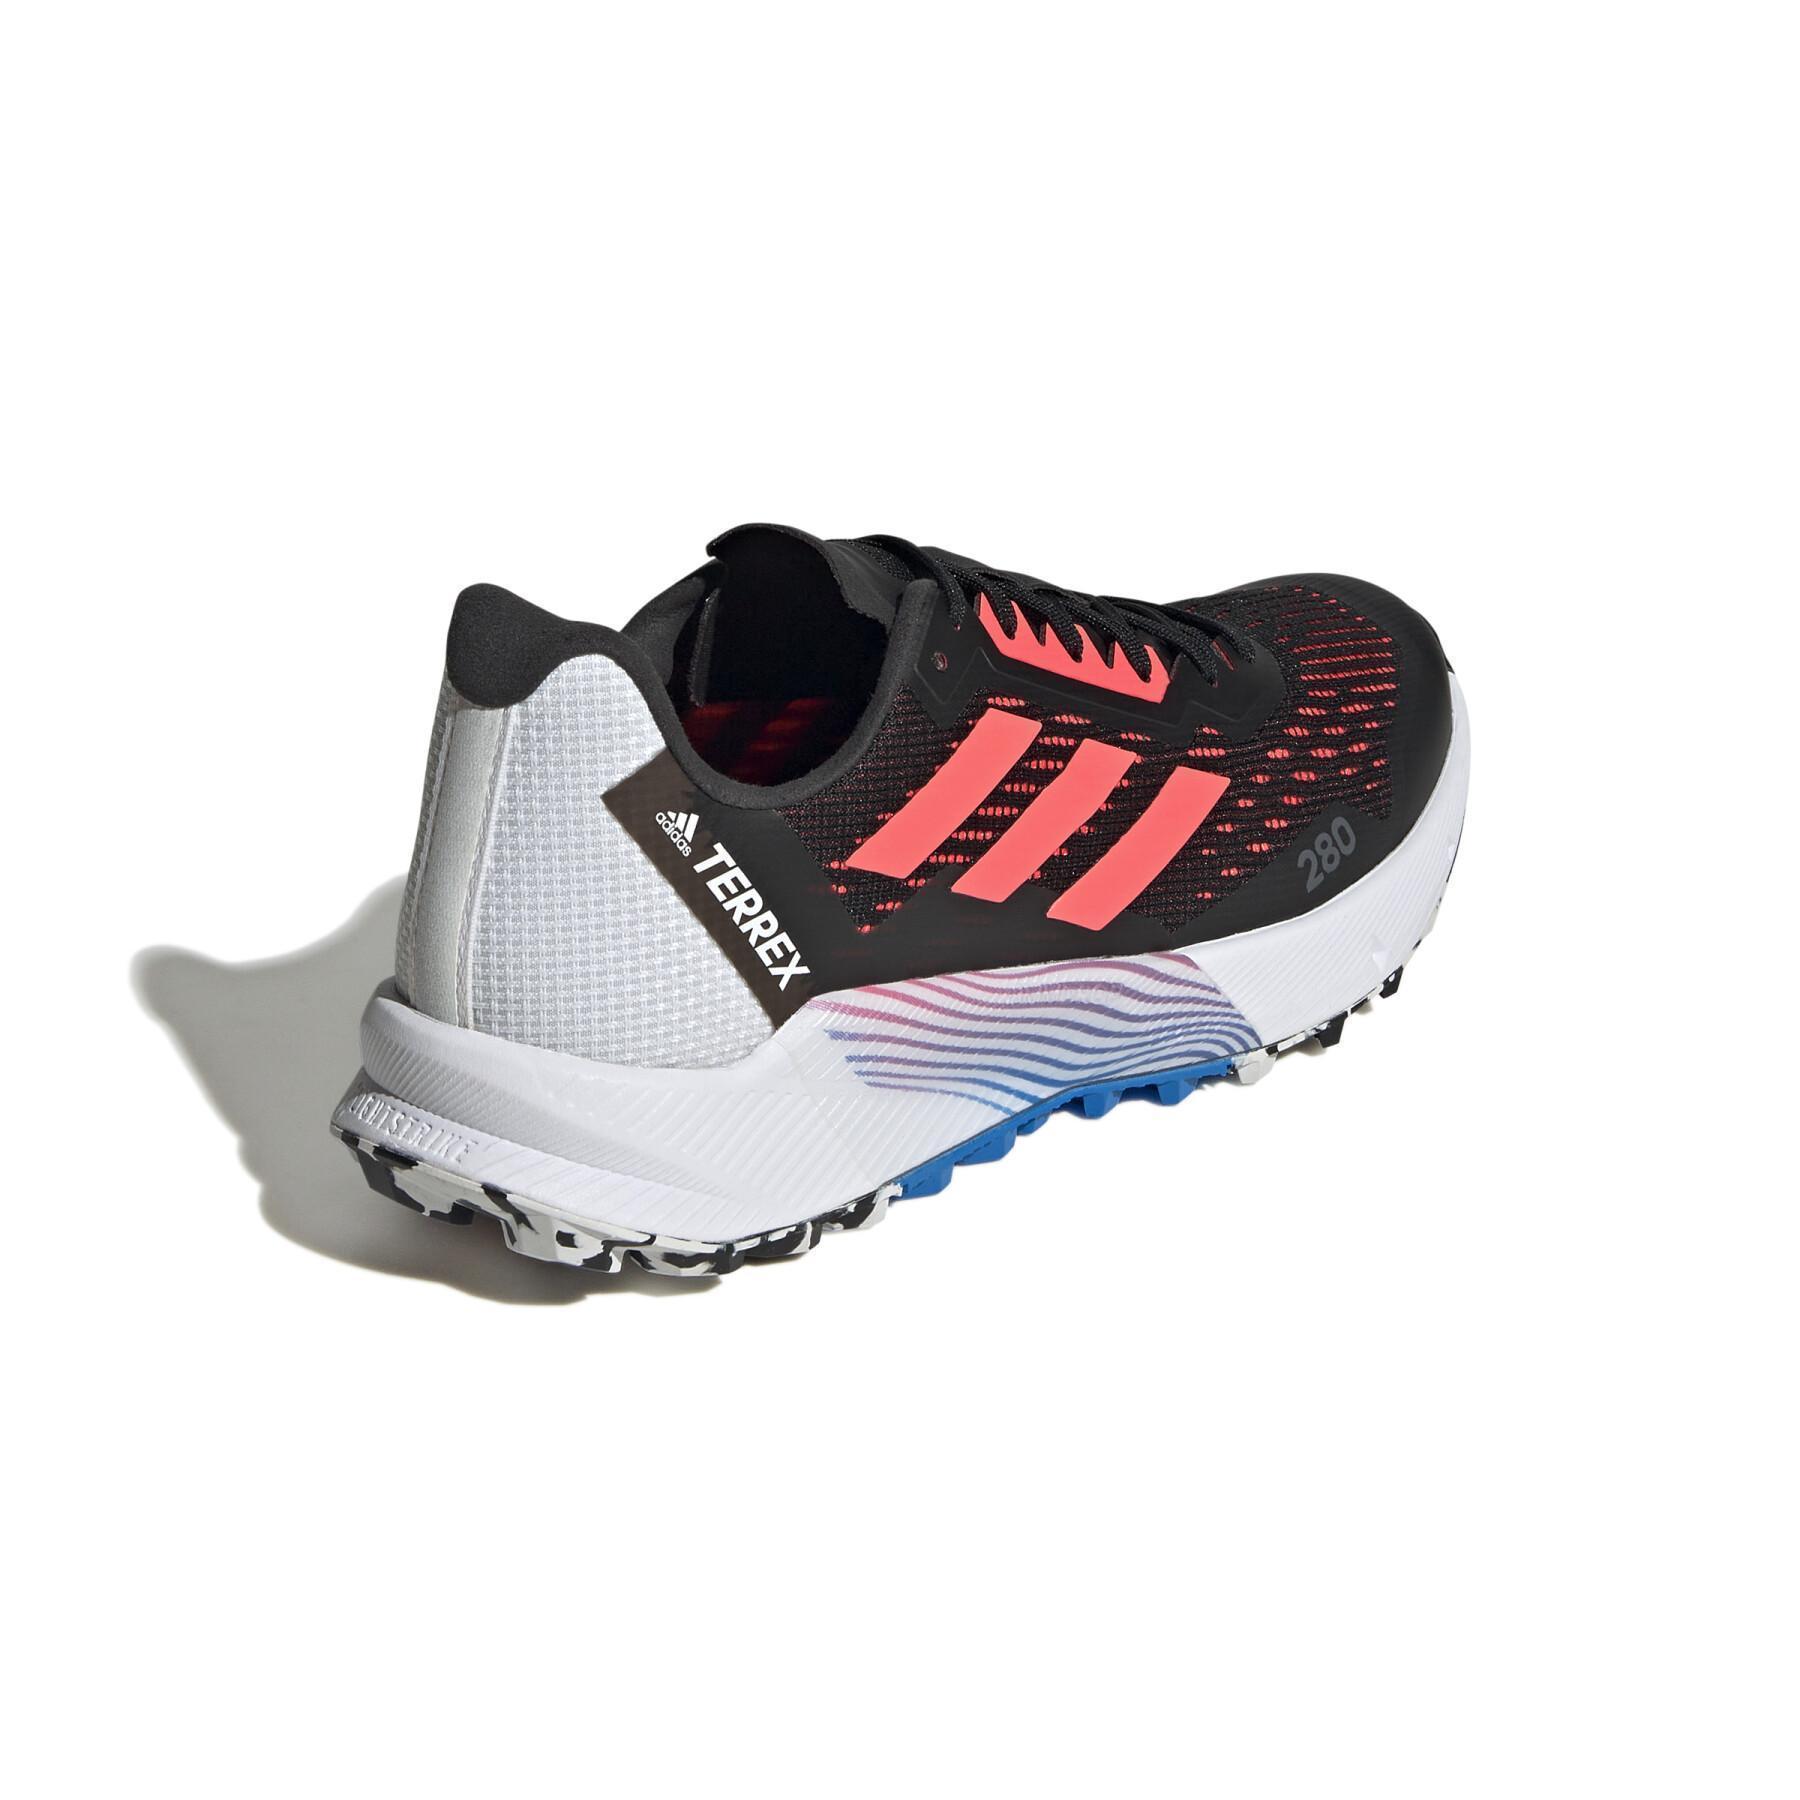 Women's Trail running shoes adidas Terrex agravic flow2